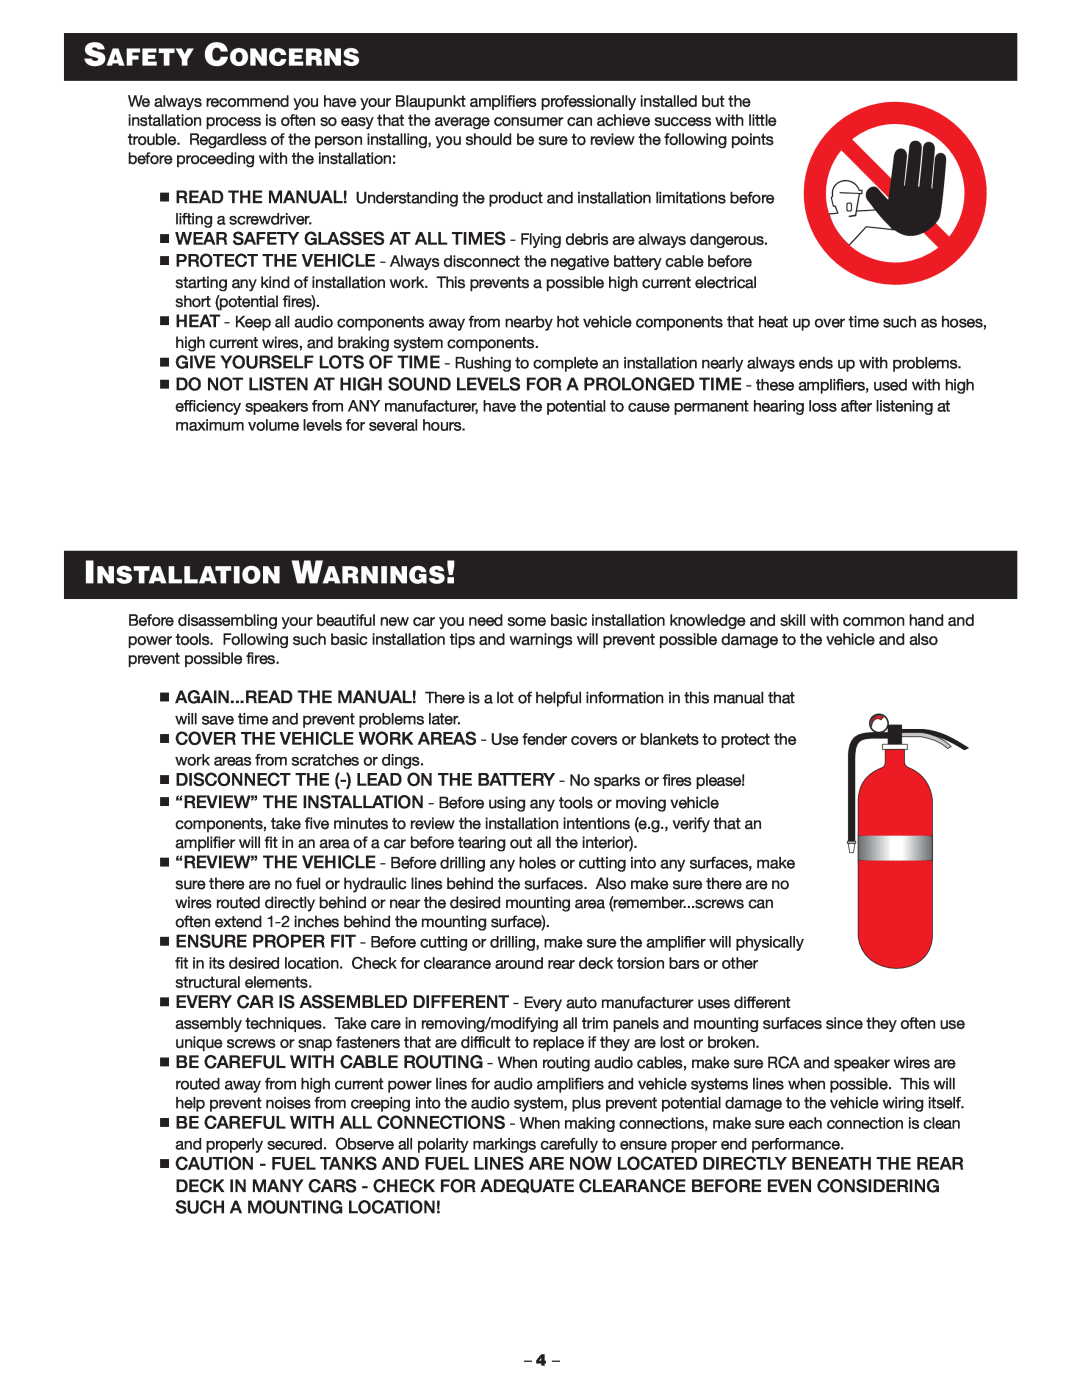 Blaupunkt MPA 400US manual Safety Concerns, Installation Warnings 